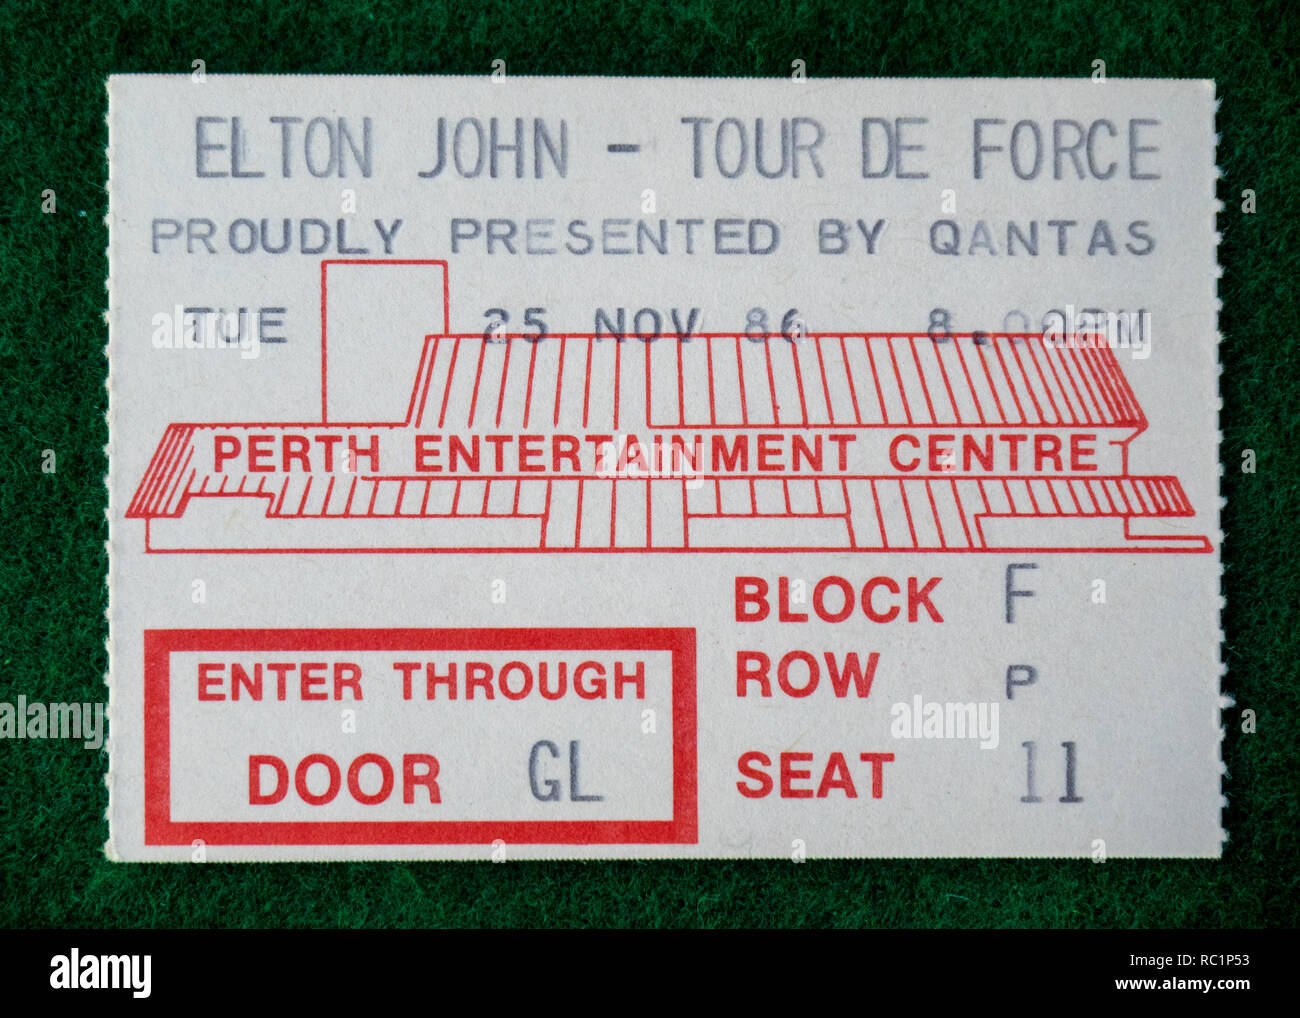 Ticket for Elton John concert at Perth Entertainment Centre in 1986 WA Australia. Stock Photo